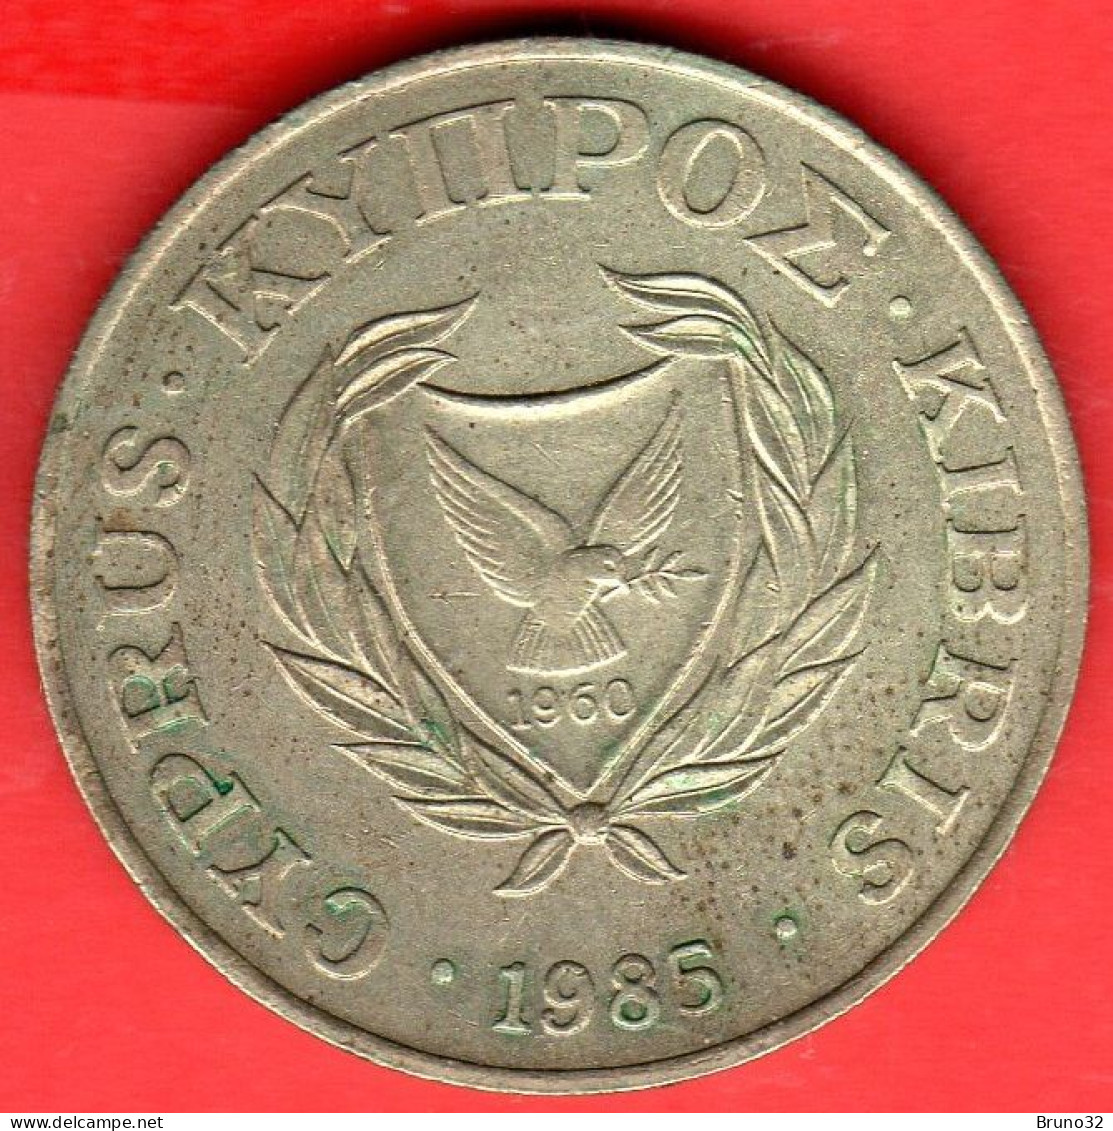 Cipro - Chyprus - Kıbrıs - Chypre - 1985 - 20 Cents - QFDC/aUNC - Come Da Foto - Cyprus